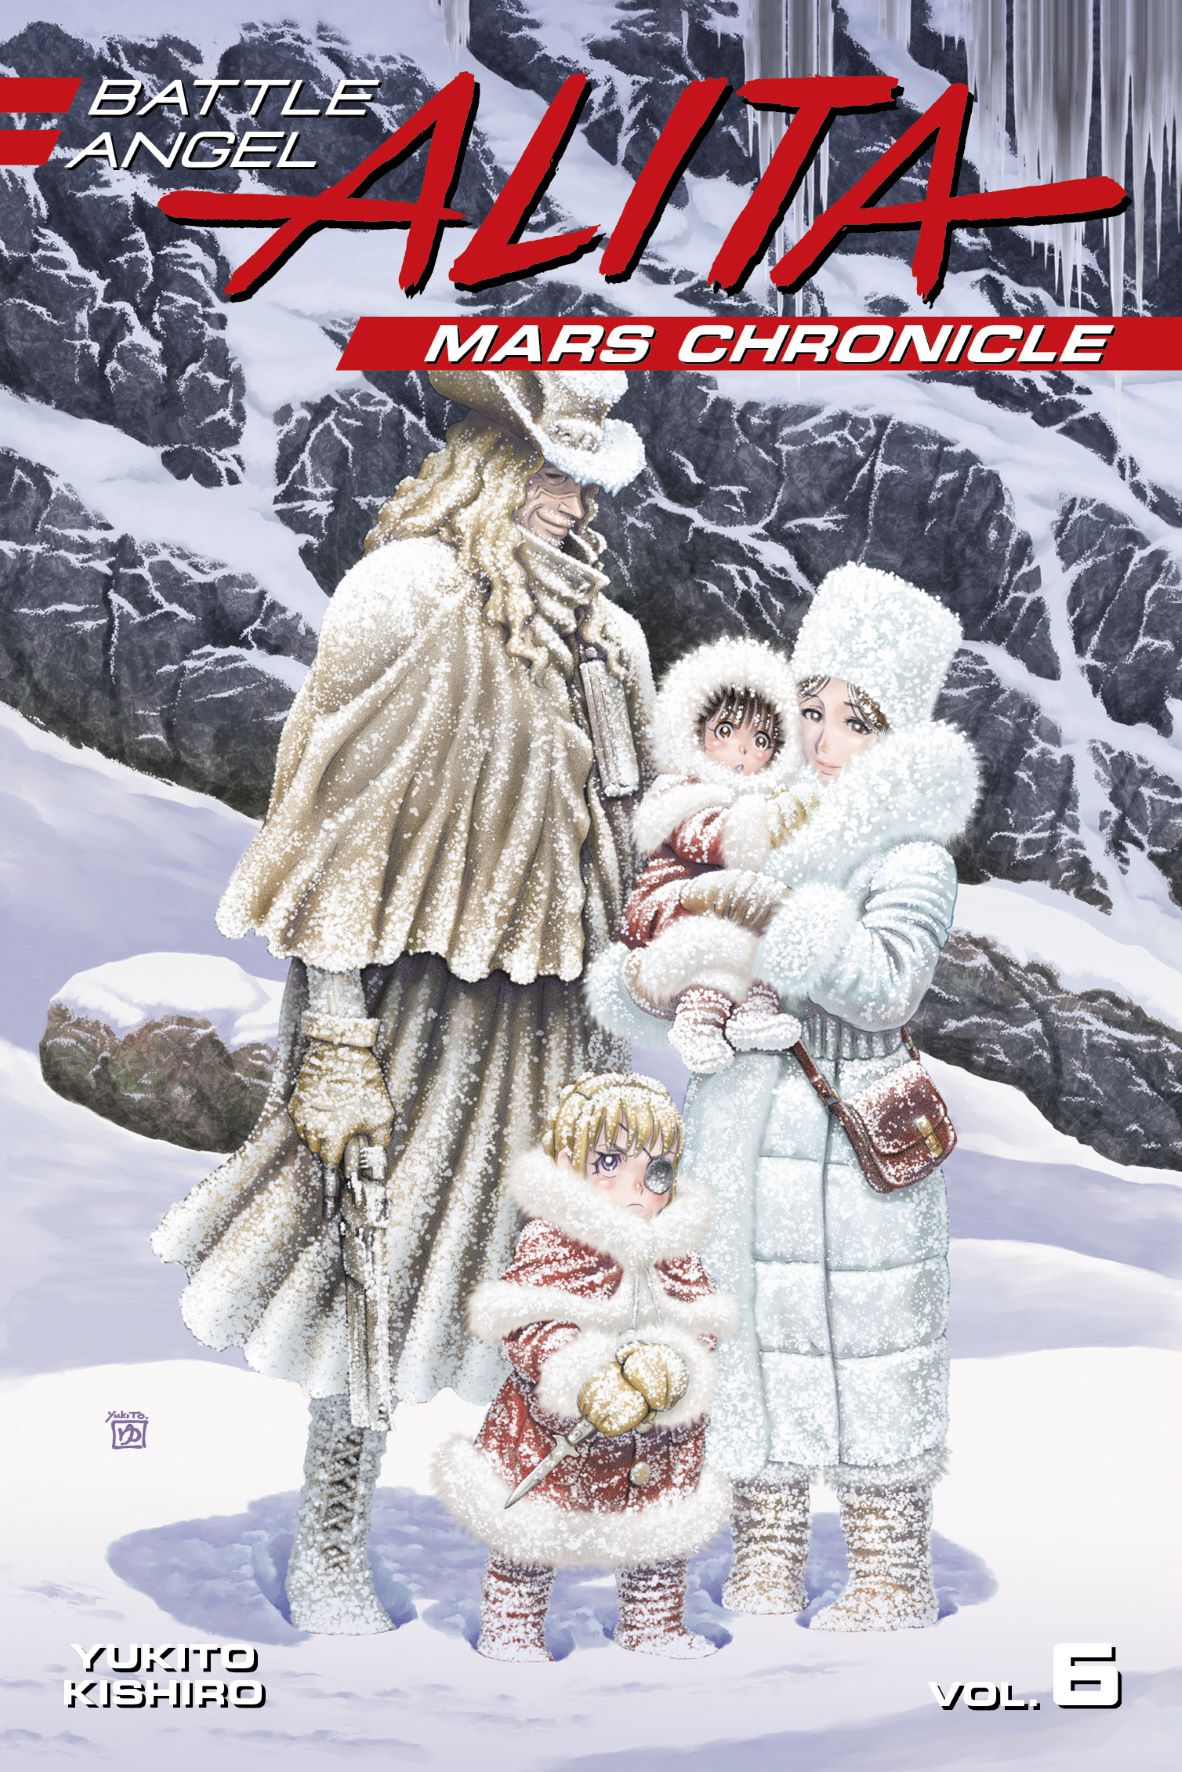 Battle Angel Alita Mars Chronicle Manga Volume 6